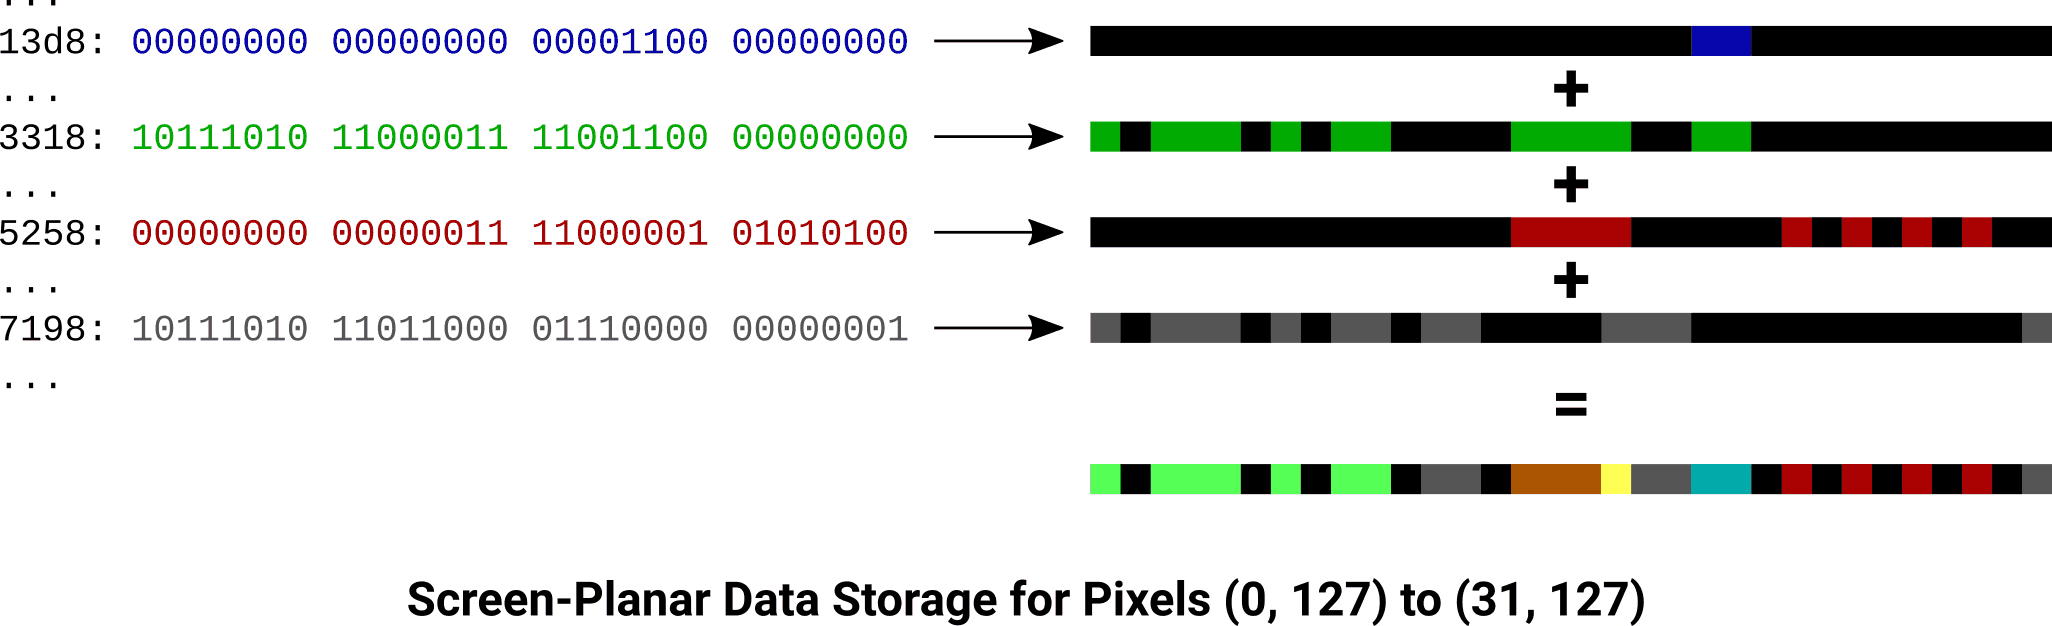 Screen-planar data storage example.